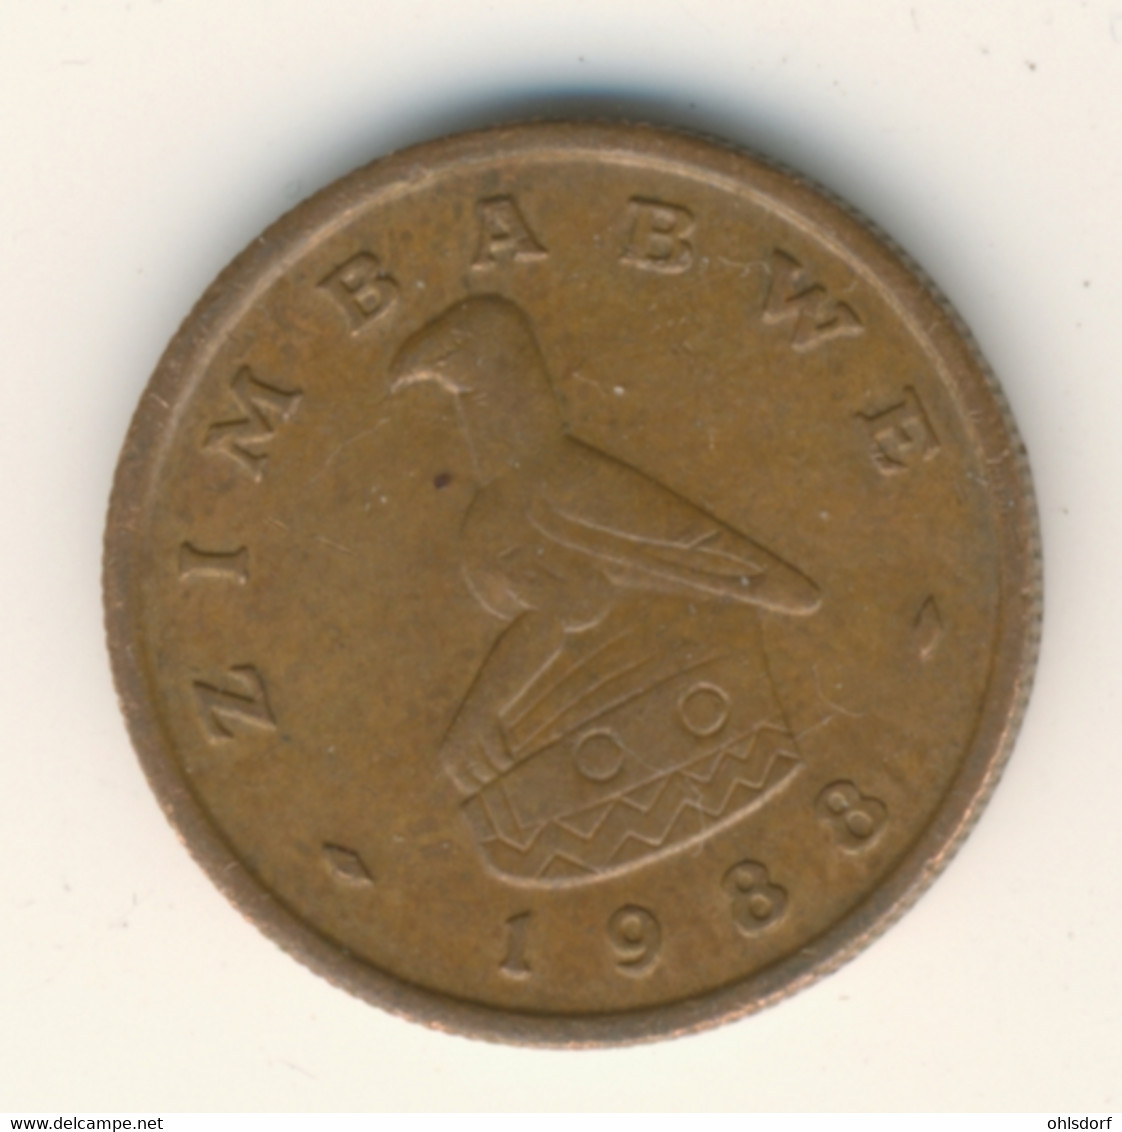 ZIMBABWE 1988: 1 Cent, KM 1 - Simbabwe